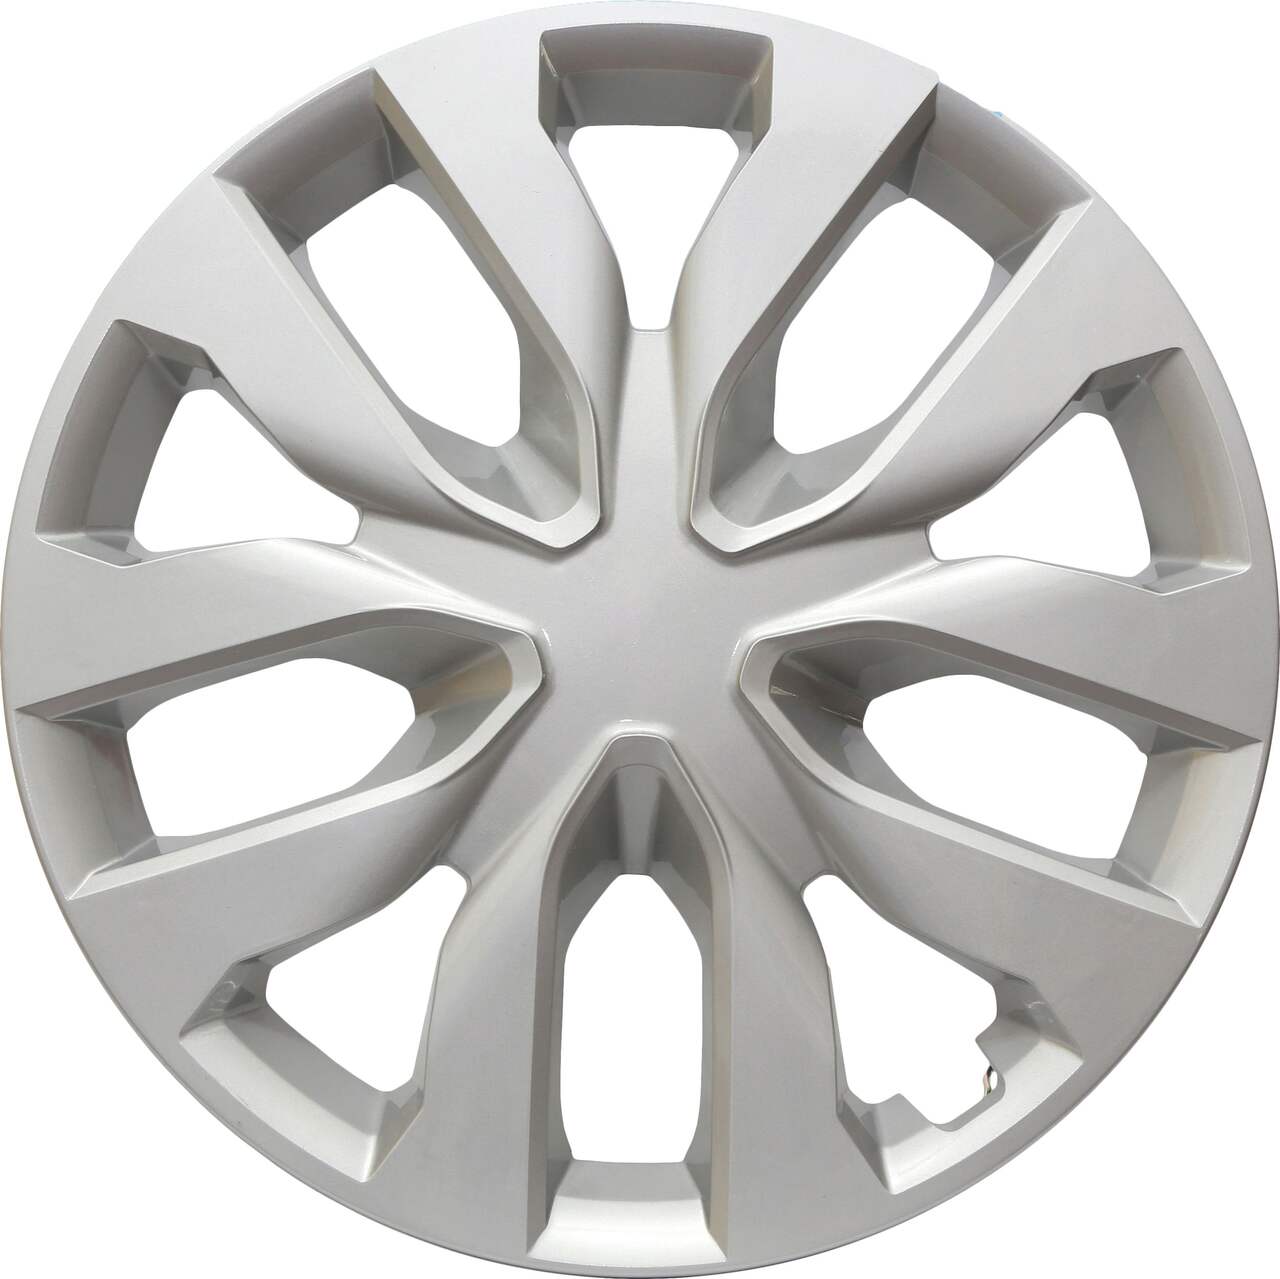 DriveStyle Jerez Wheel Cover, Silver, 17-in, 4-pk